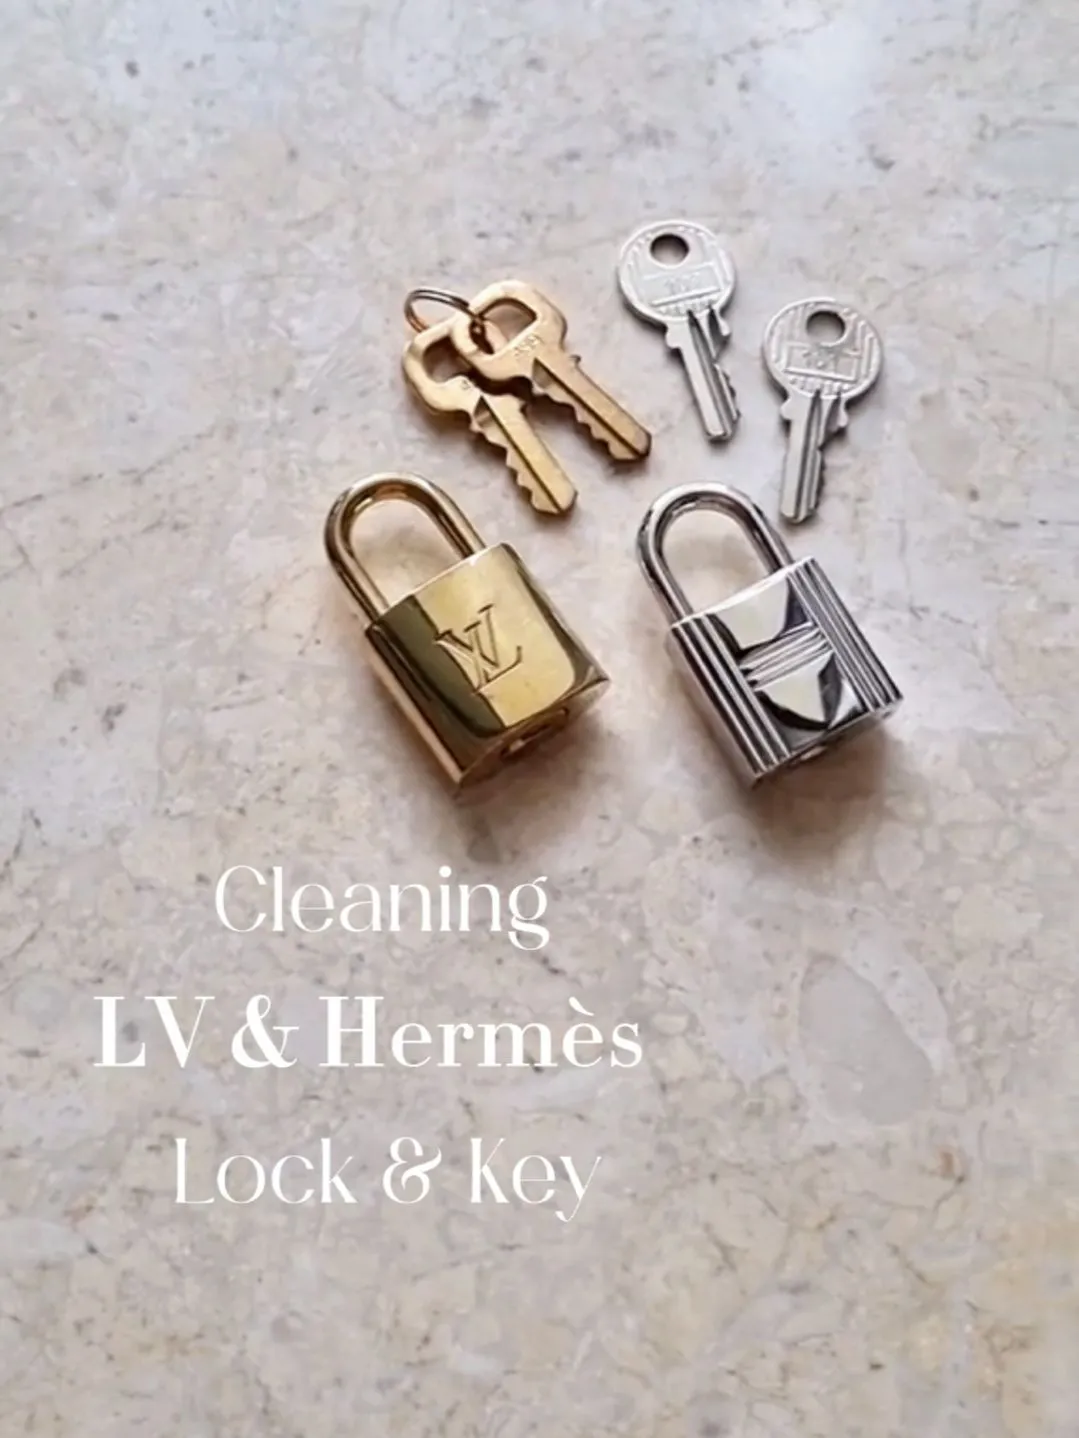 Louis Vuitton Padlock with Key No. 313 - I Love Handbags